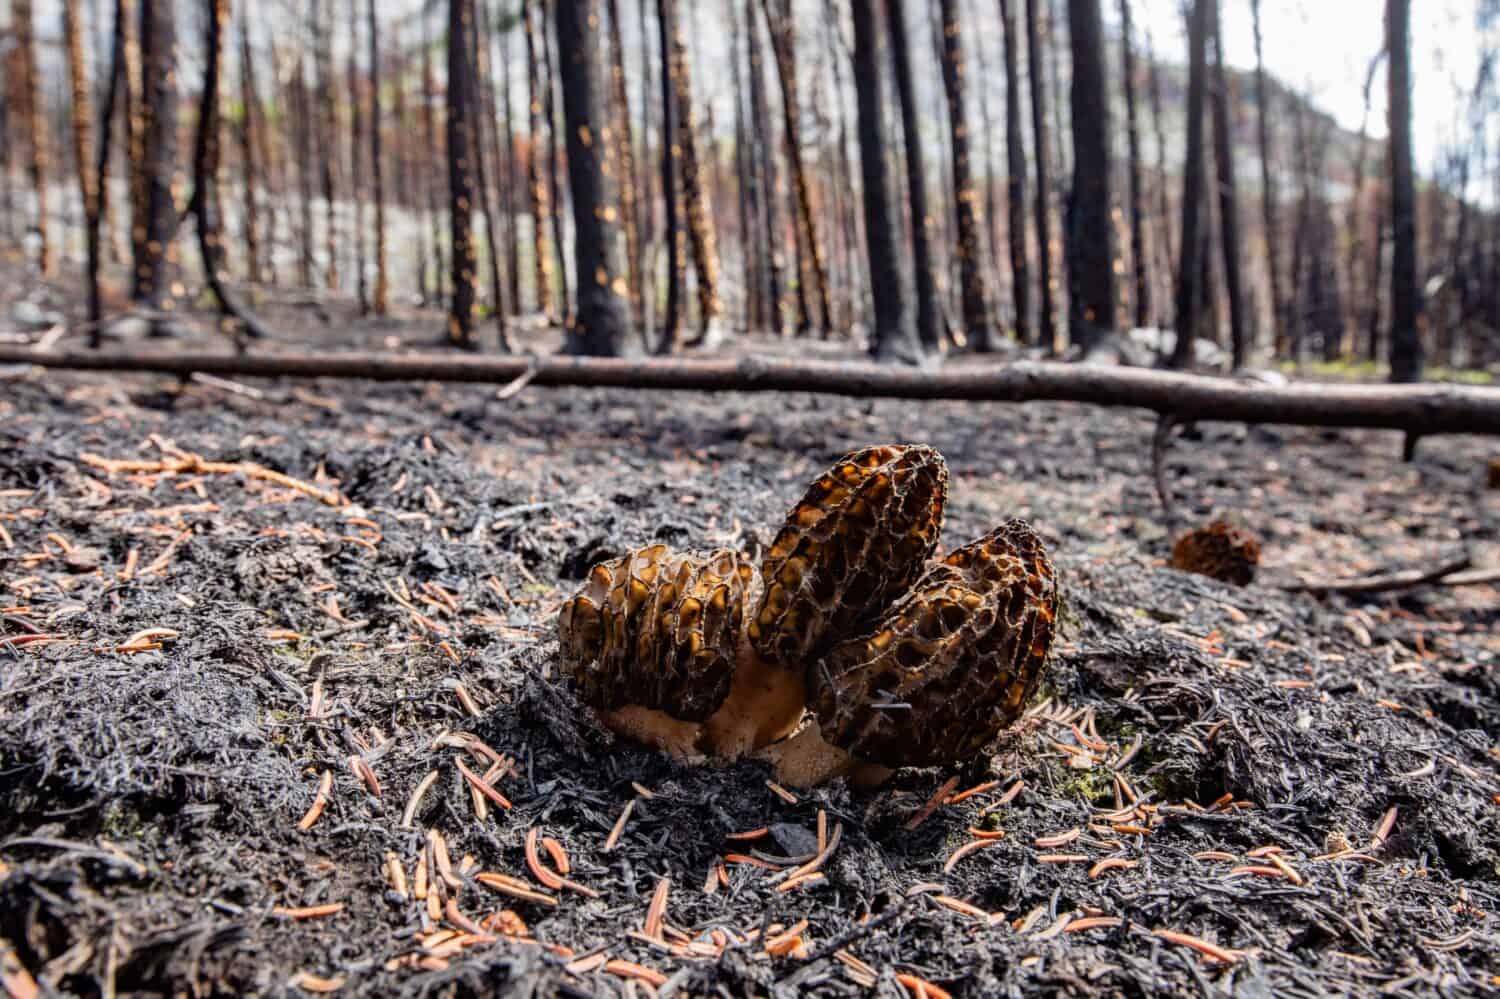 Cluster of Black Morels, Morchella elata, mushrooms growing after forest fire on burnt forest floor with  destroyed forest after wildfire background